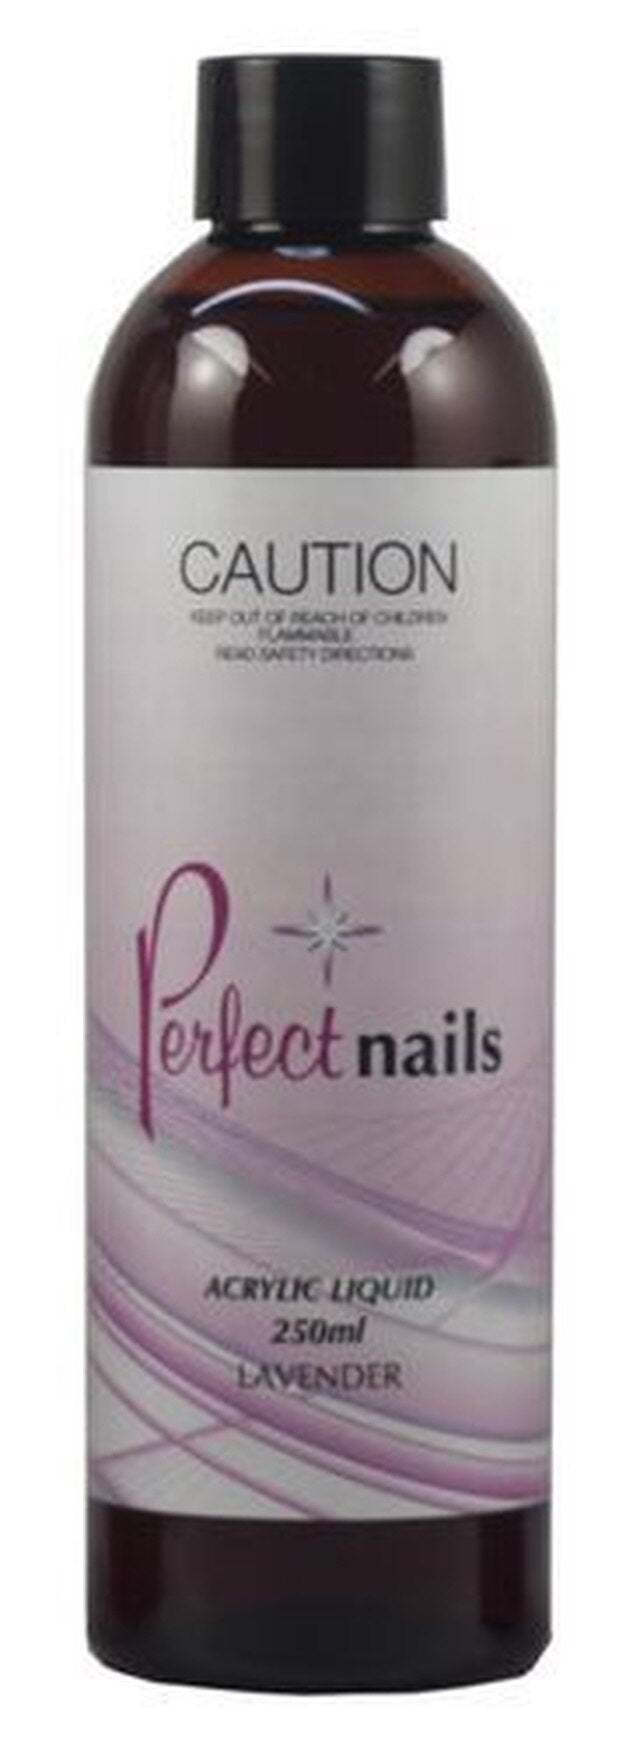 Perfect Nails Acrylic Liquid